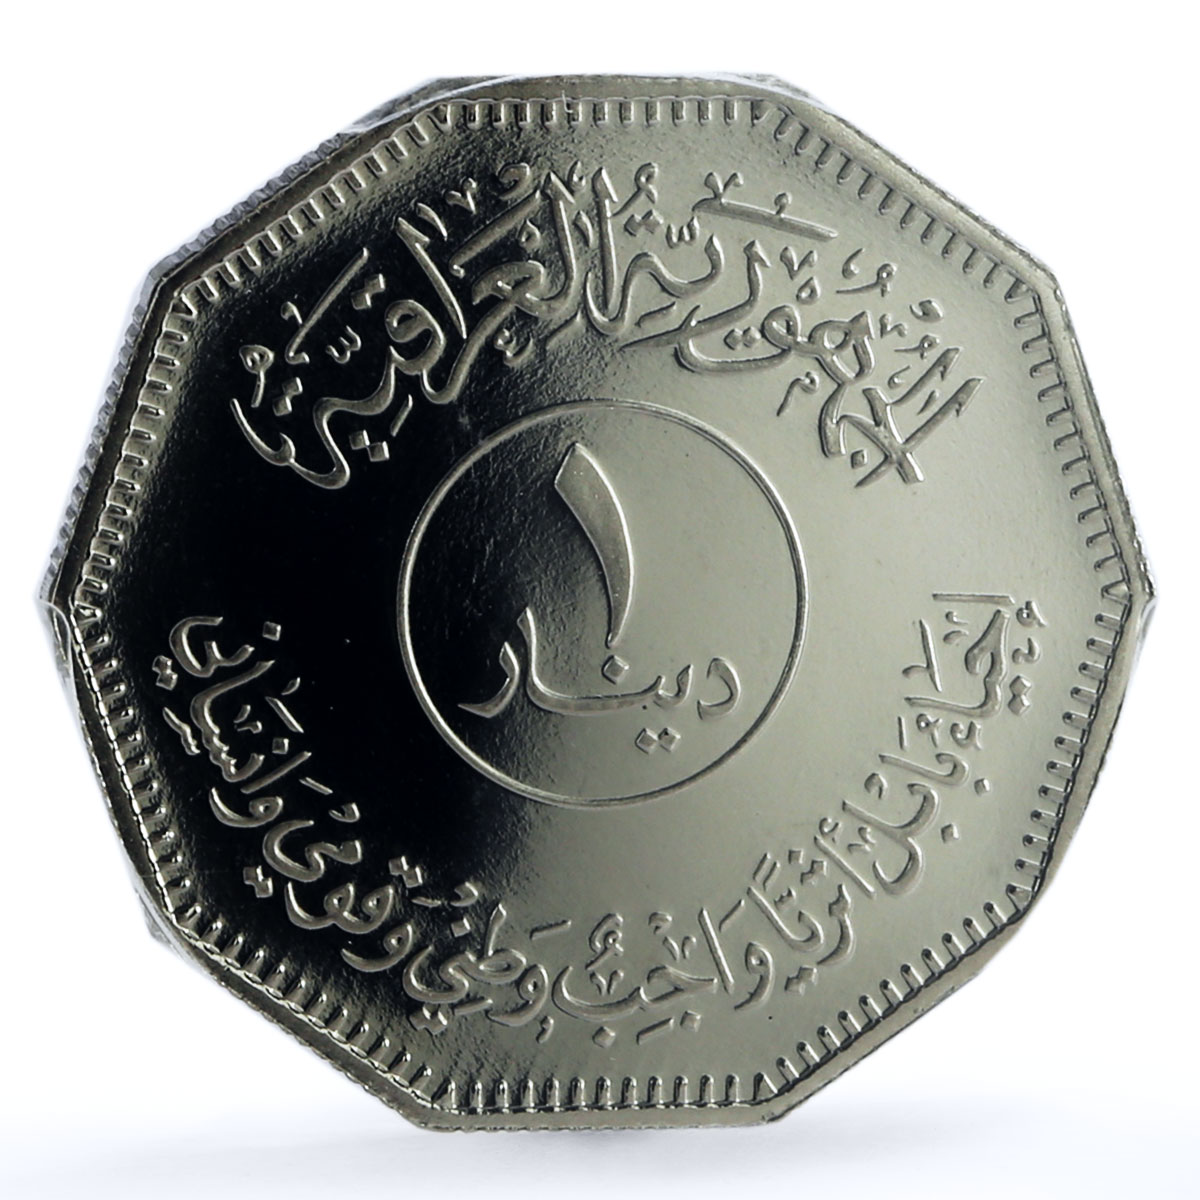 Iraq 1 dinar Babylon Tower Ziggurat PR68 PCGS nickel coin 1982